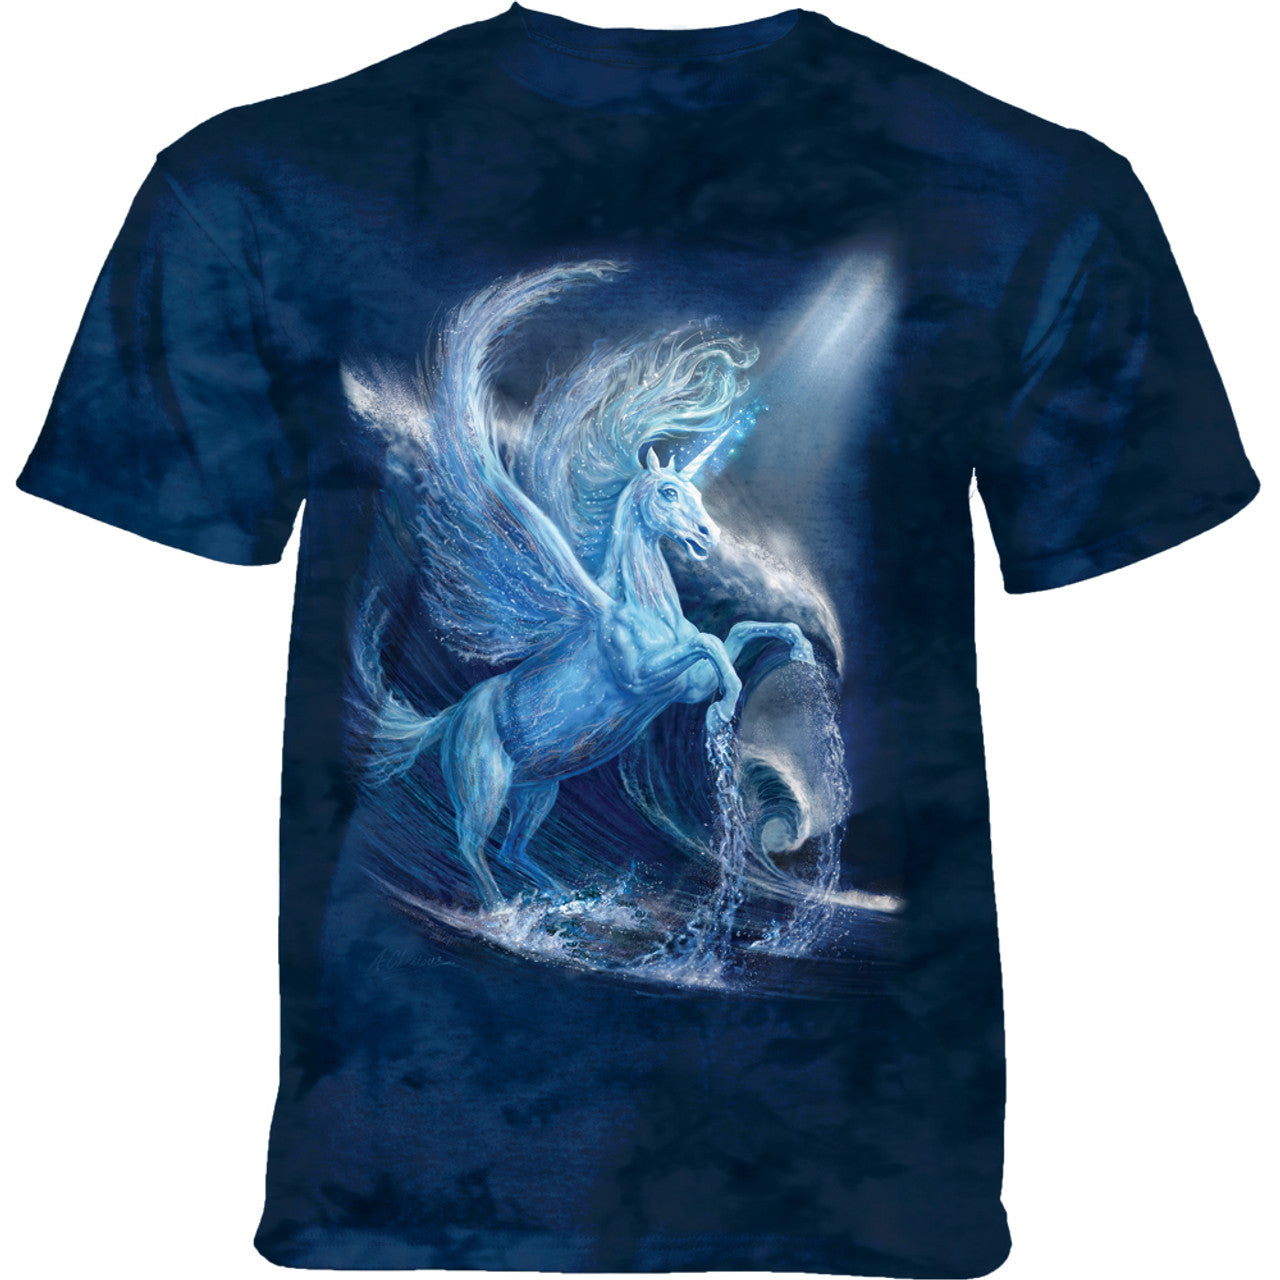 Water Pegasus T-Shirt